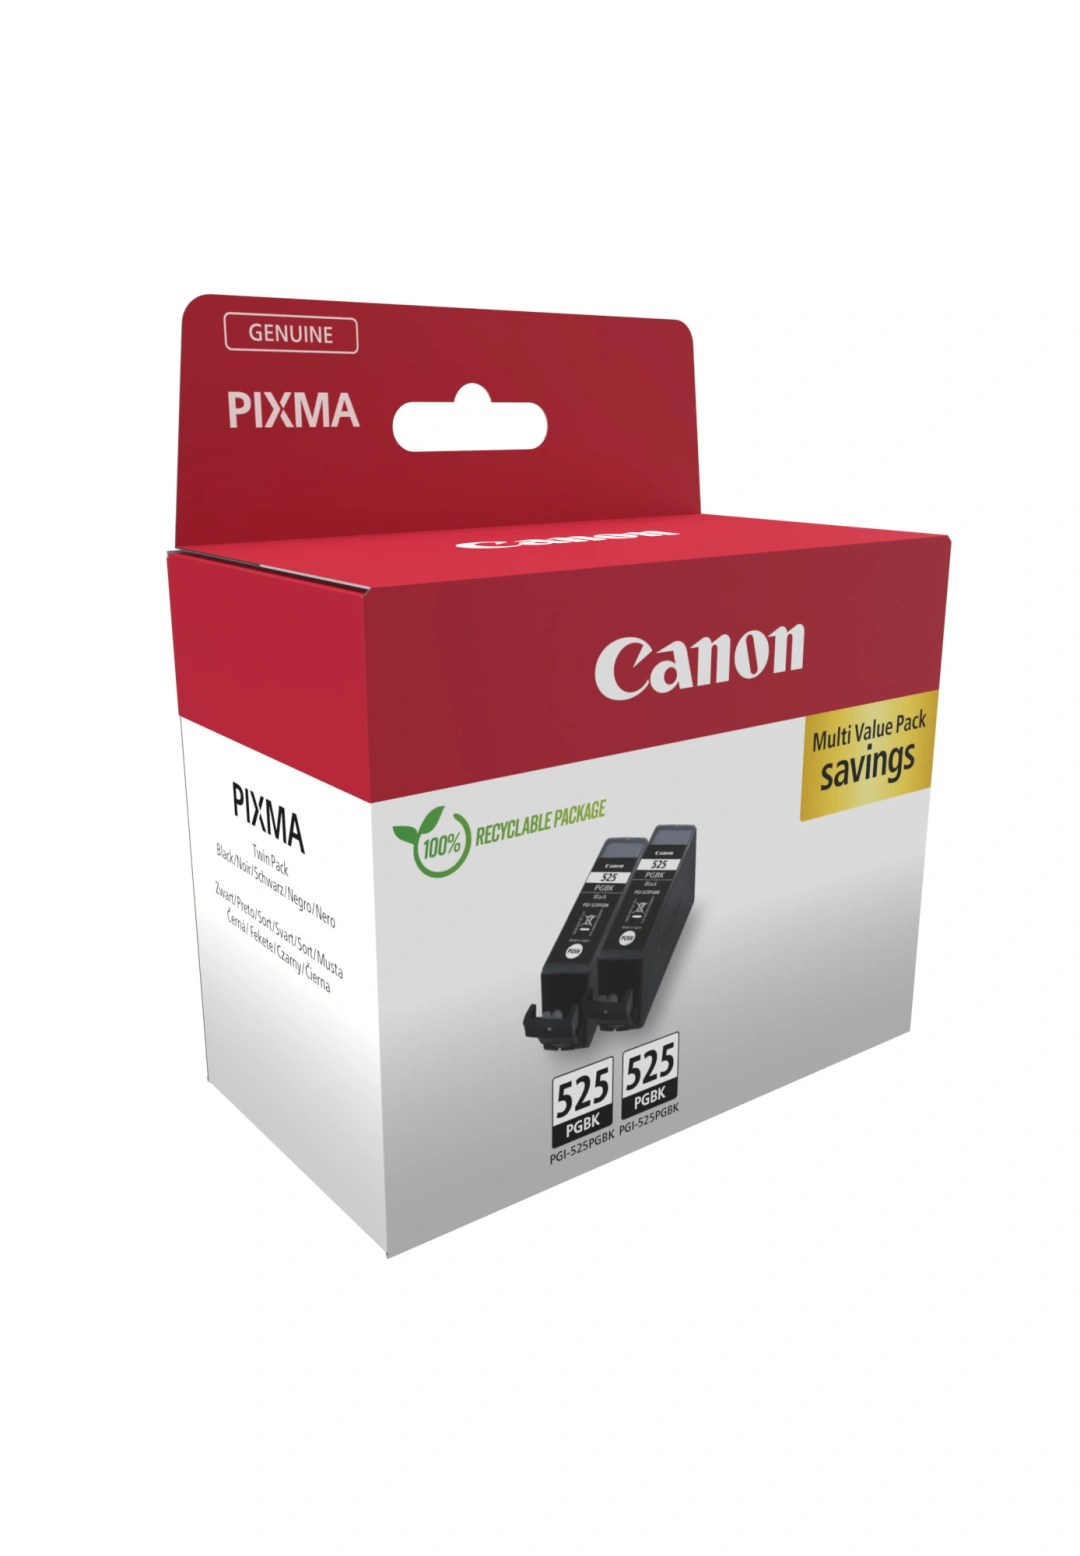 Canon cartridge PGI-525 PGBk/Twinpack/2x340str.